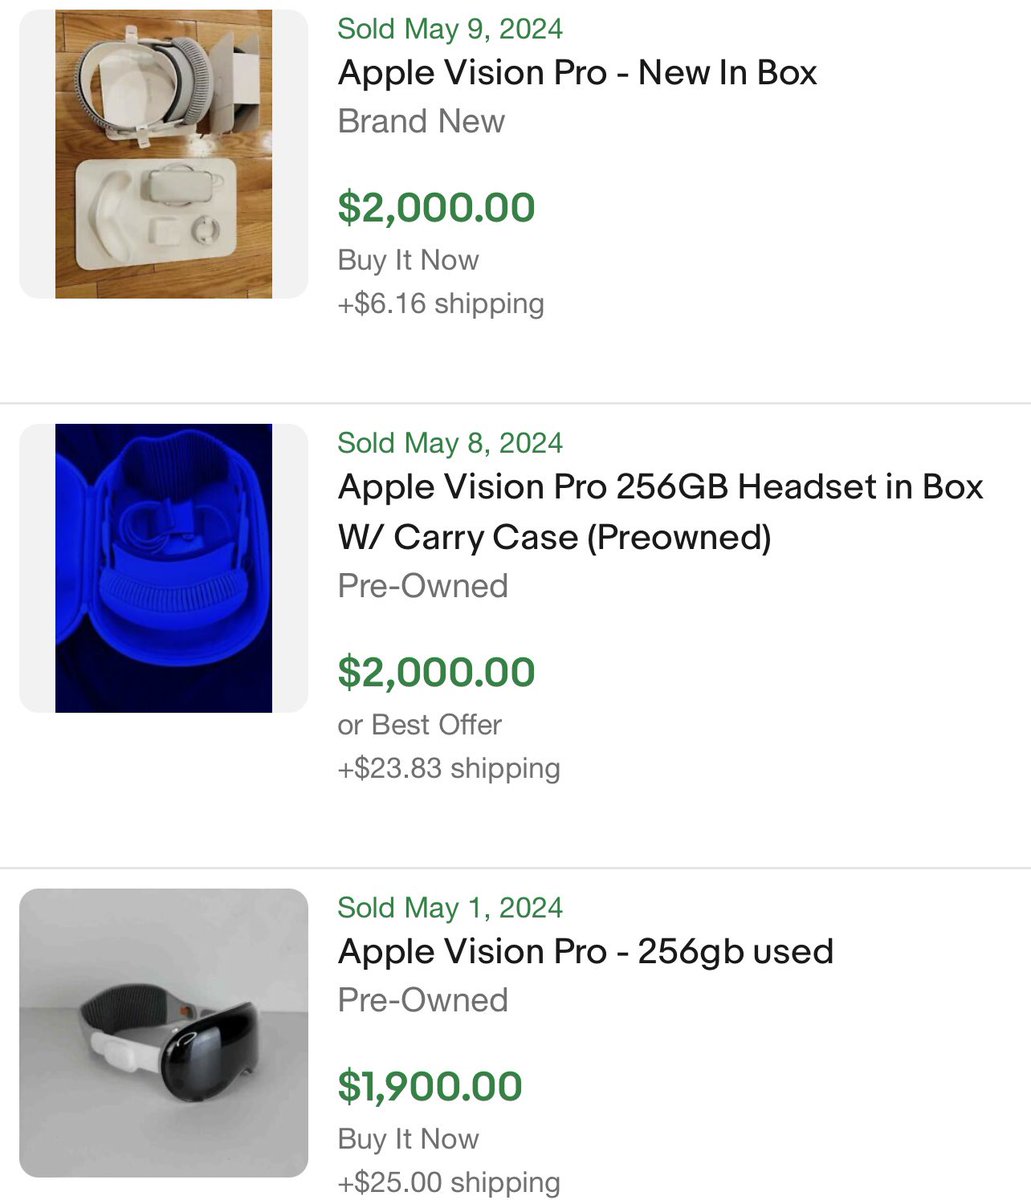 Apple Vision Pros are basically half price on eBay right now. Insane depreciation.